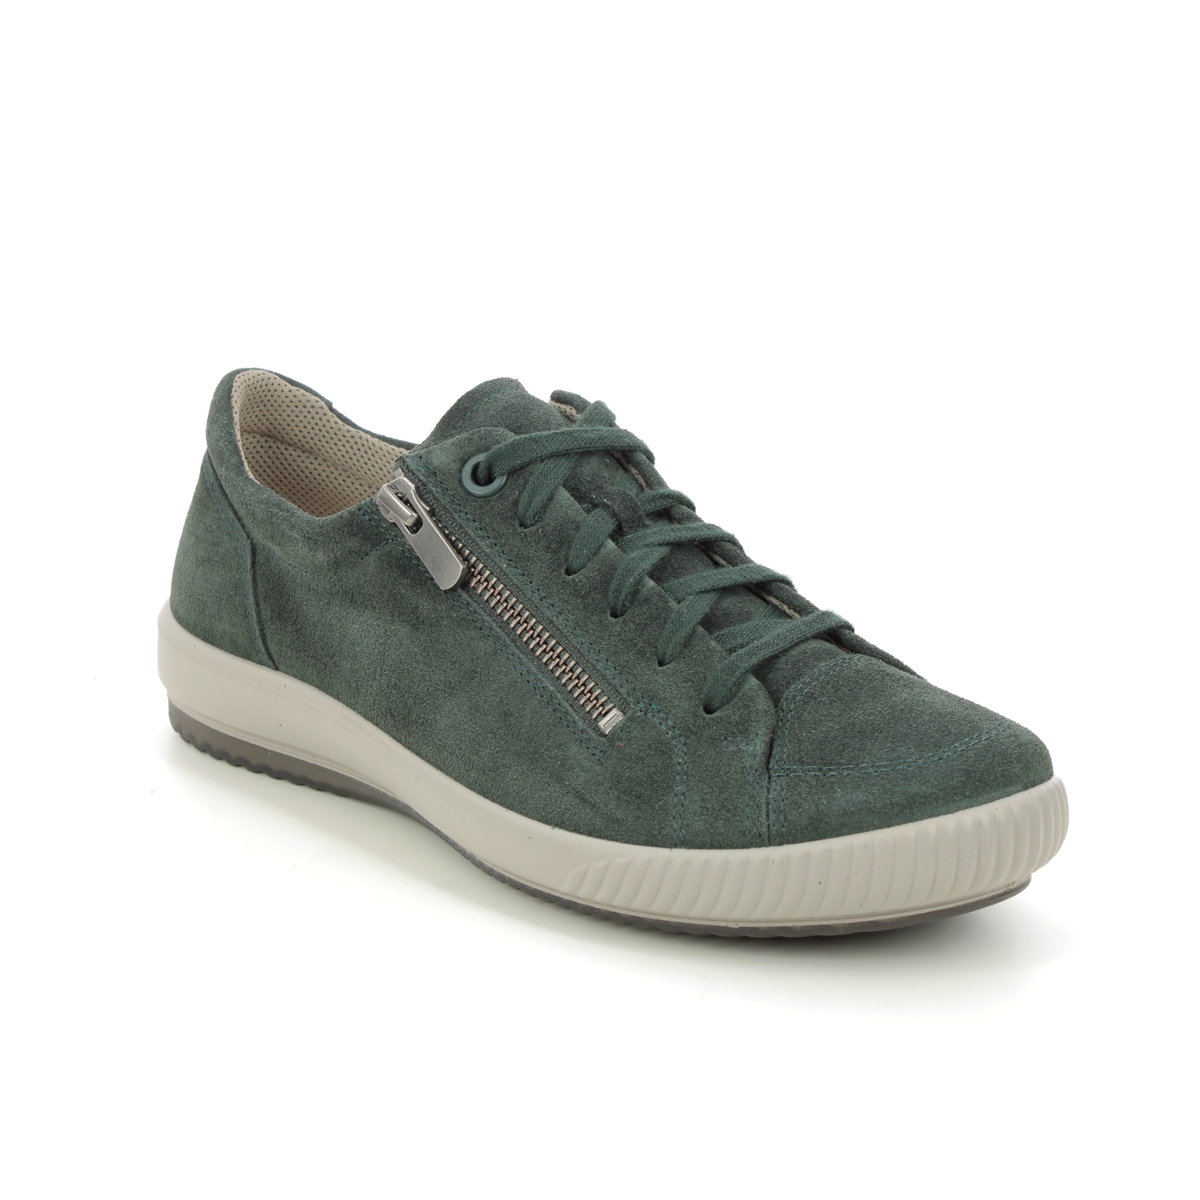 Legero Tanaro 5 Zip Green Suede Womens Lacing Shoes 2000162-7330 In Size 4 In Plain Green Suede